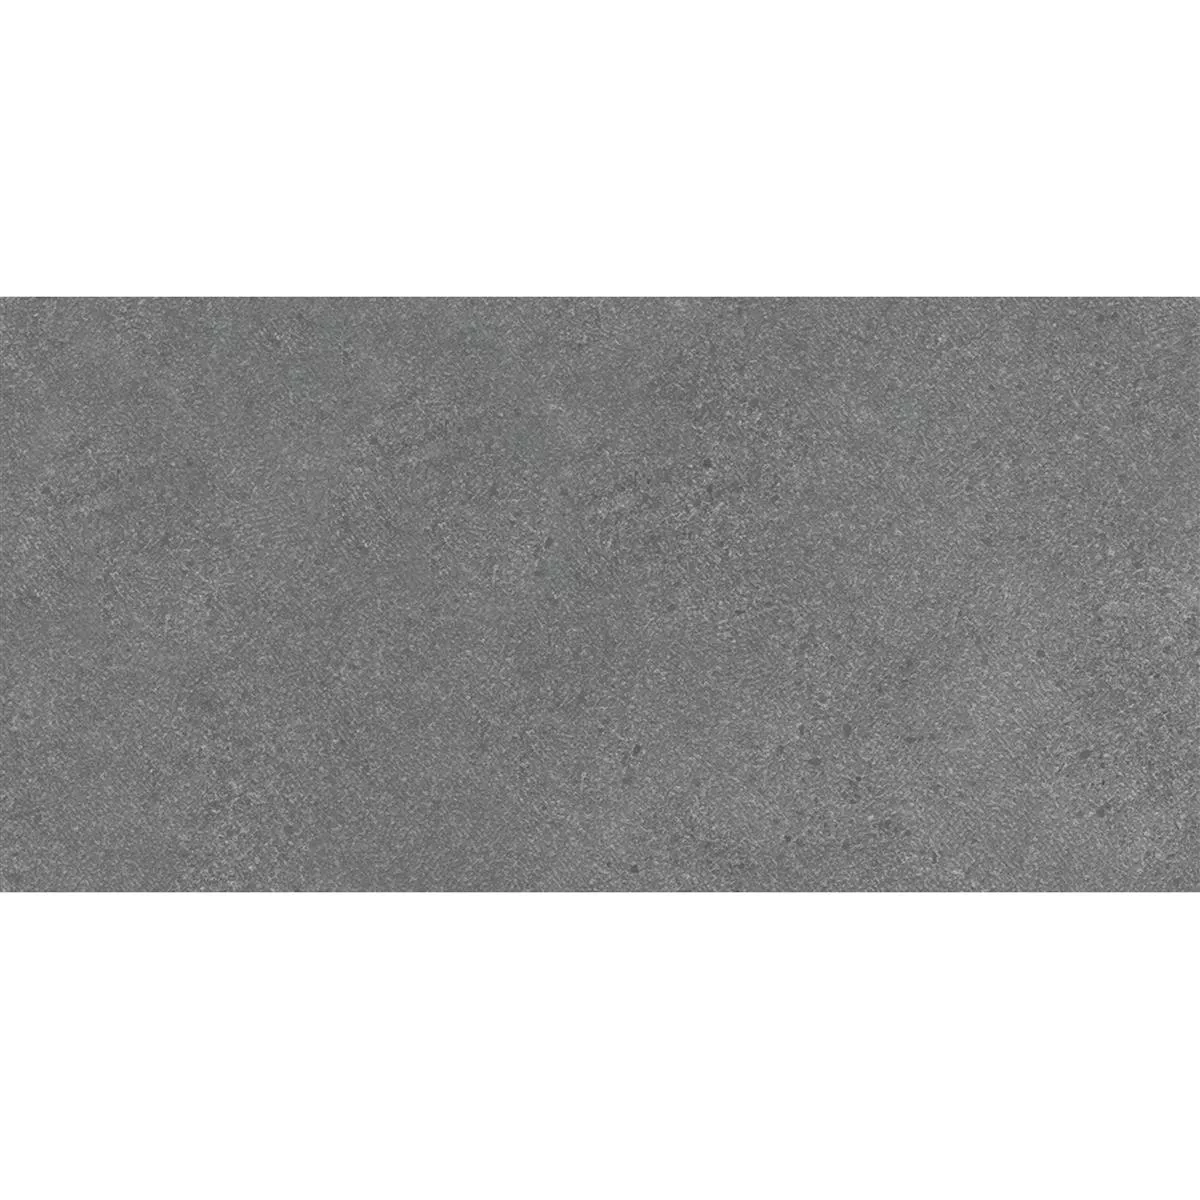 Sample Floor Tiles Galilea Unglazed R10B Anthracite 30x60cm